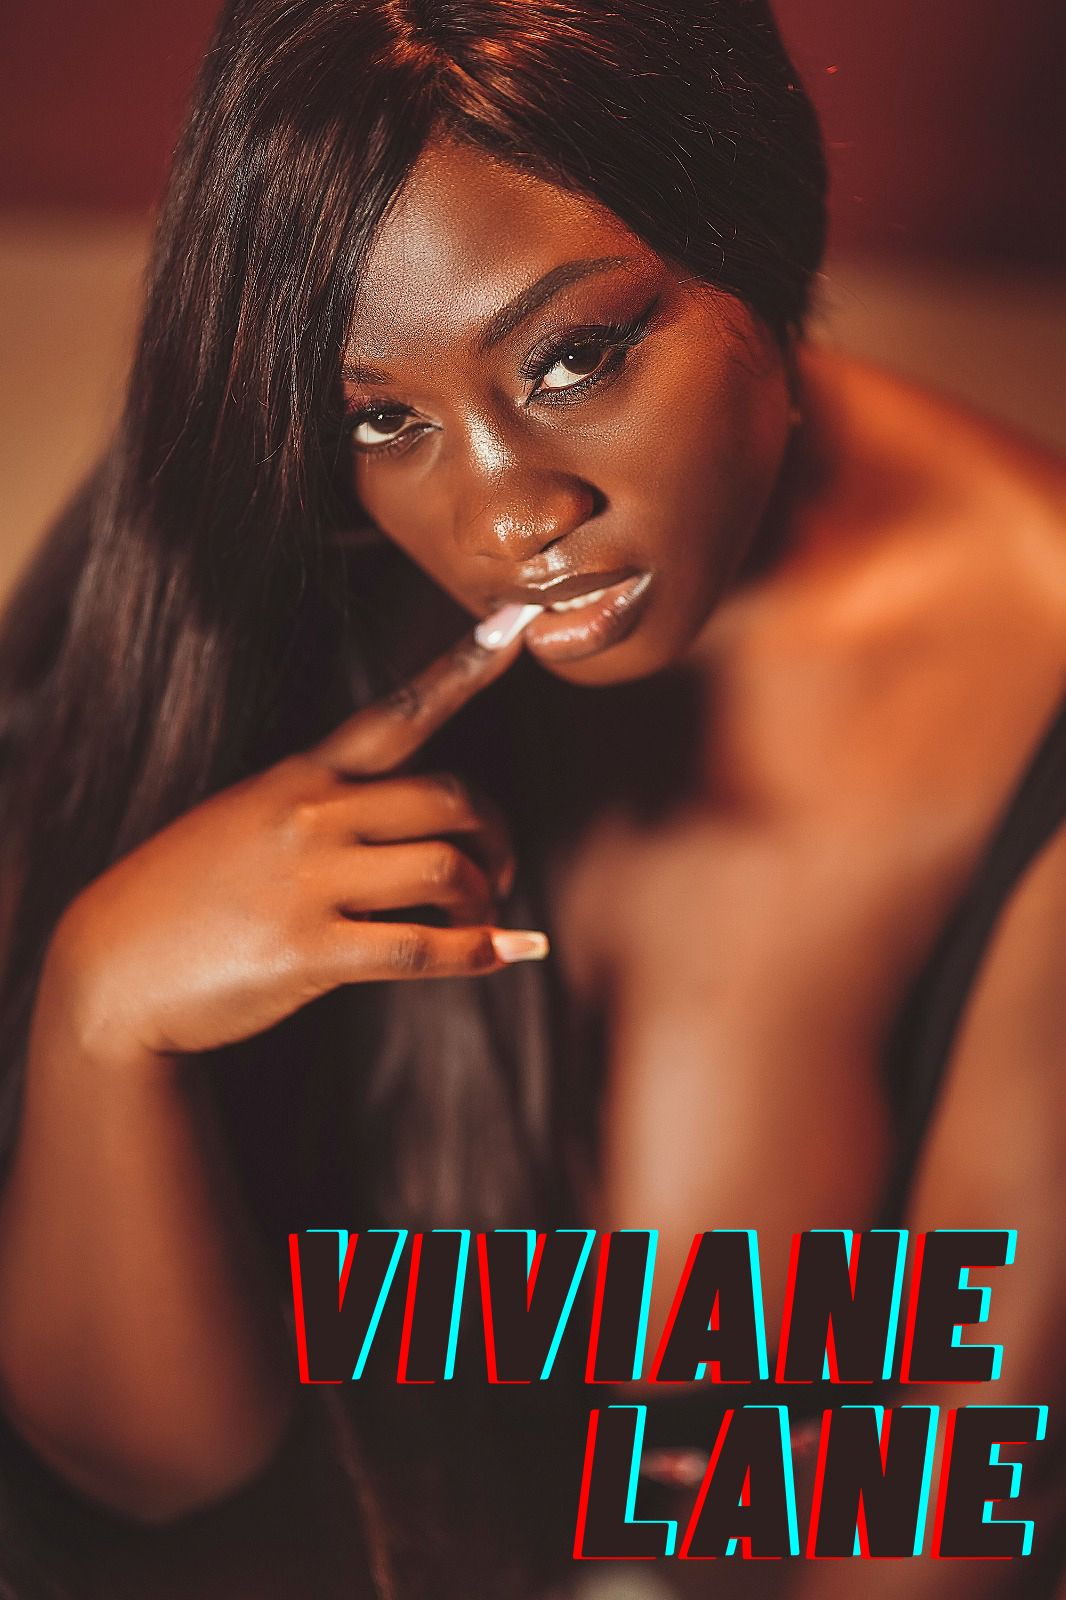 ViviannLane Welcome image: 1